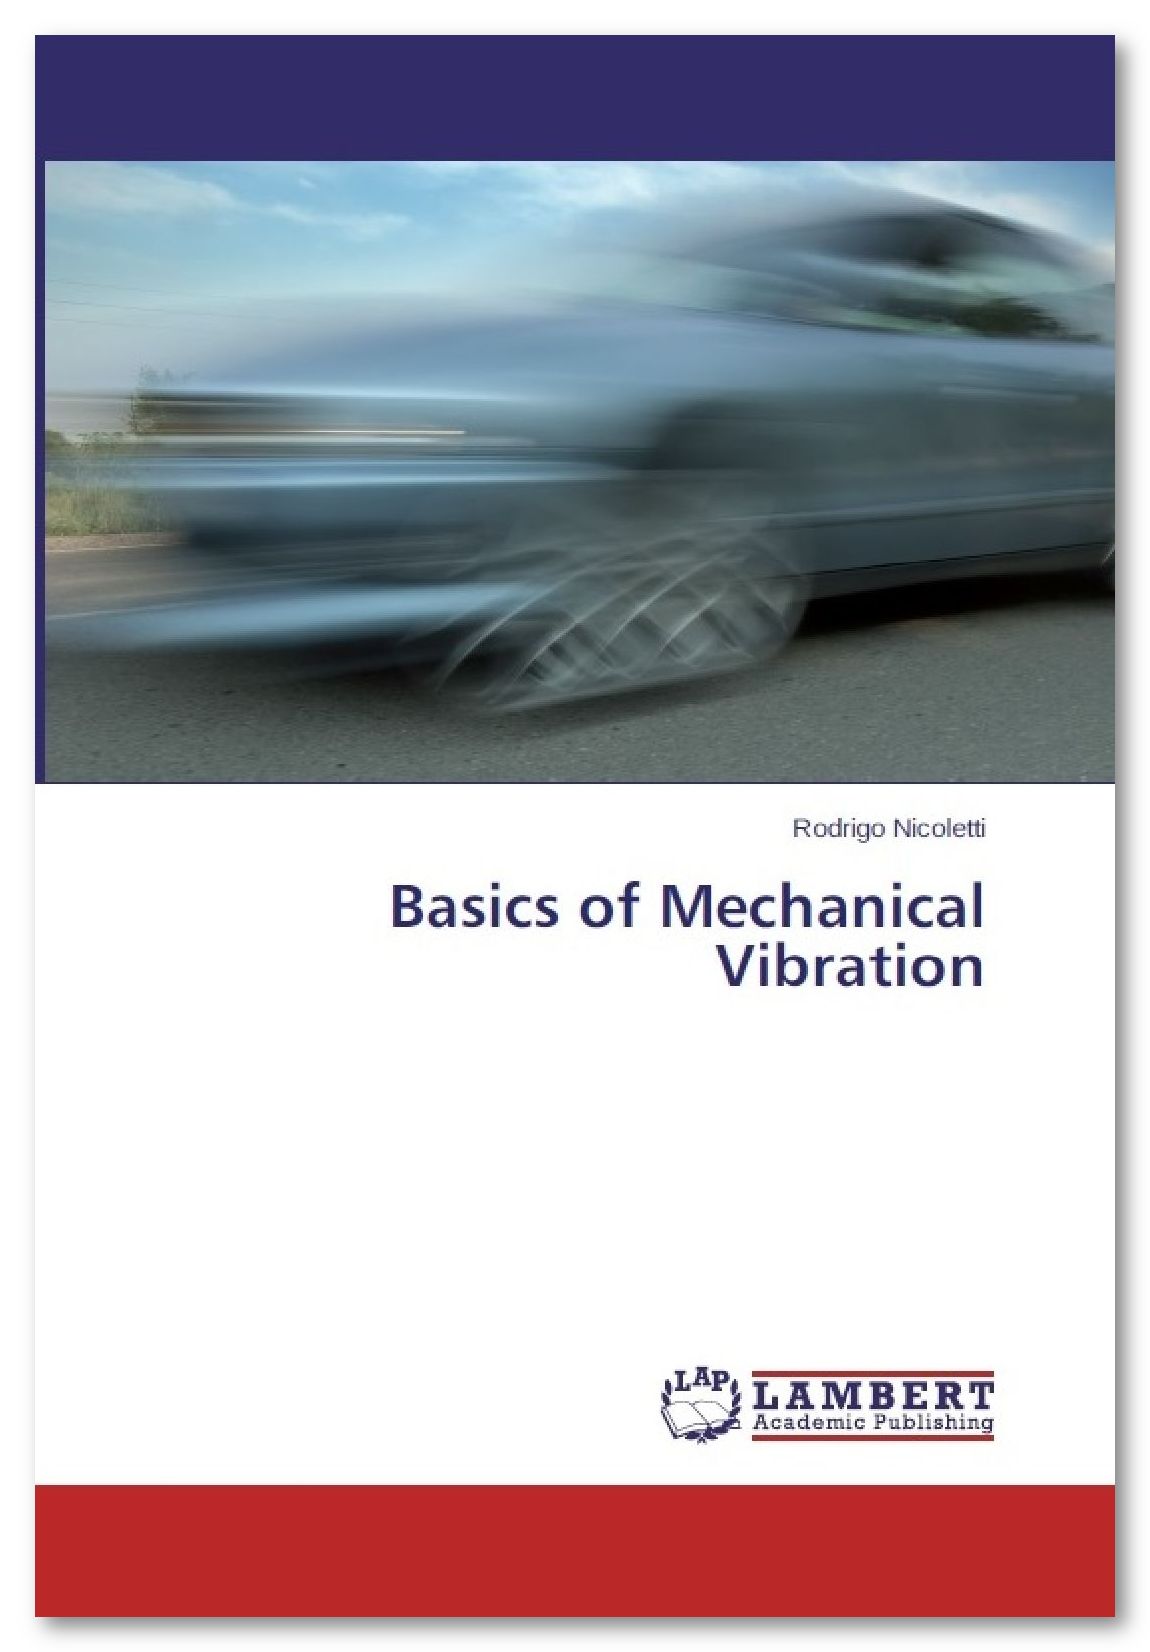 eesc livro nicoletti basics of mechanical vibration site